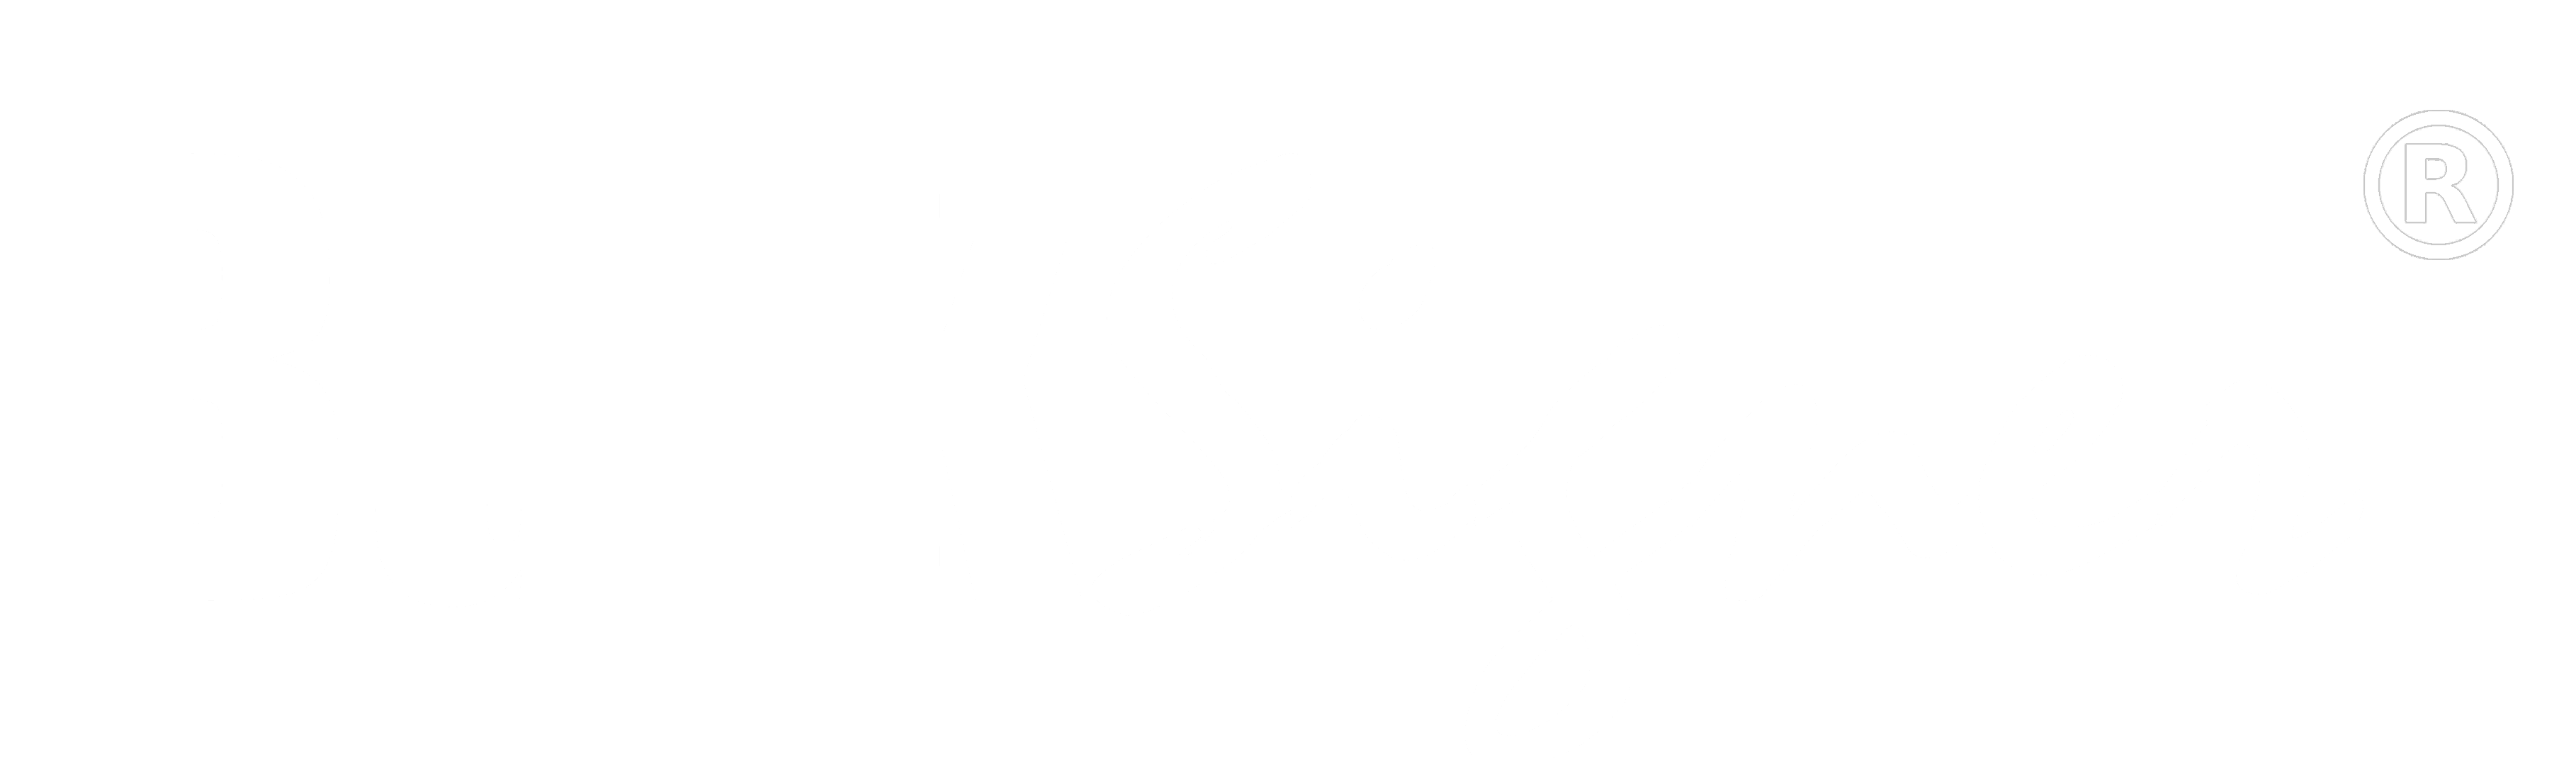 Bulksigner logo | Digital signature | Electronic signature software